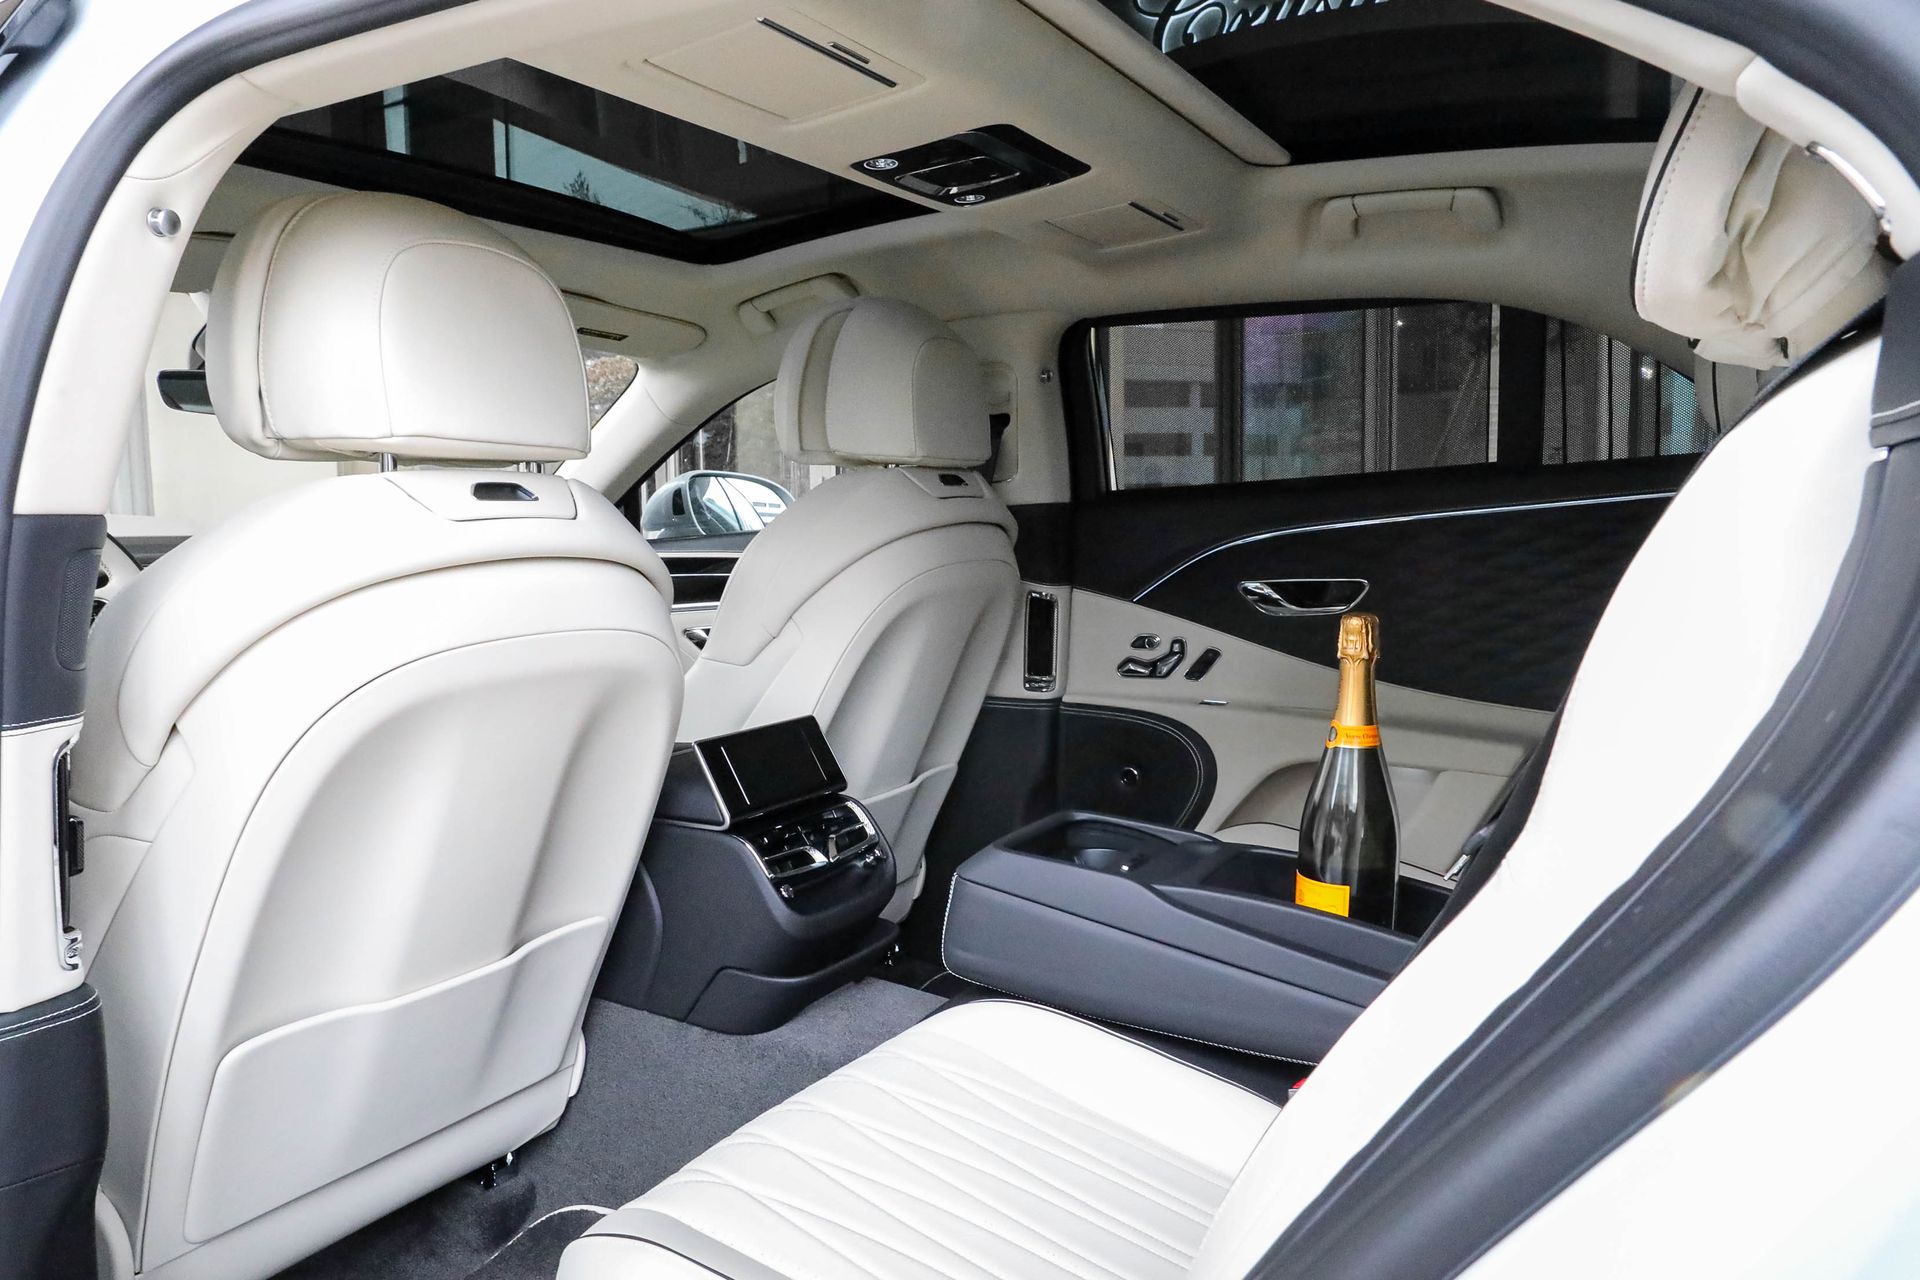 interior seats of Bentley Flying Spur luxury car photo opportunities